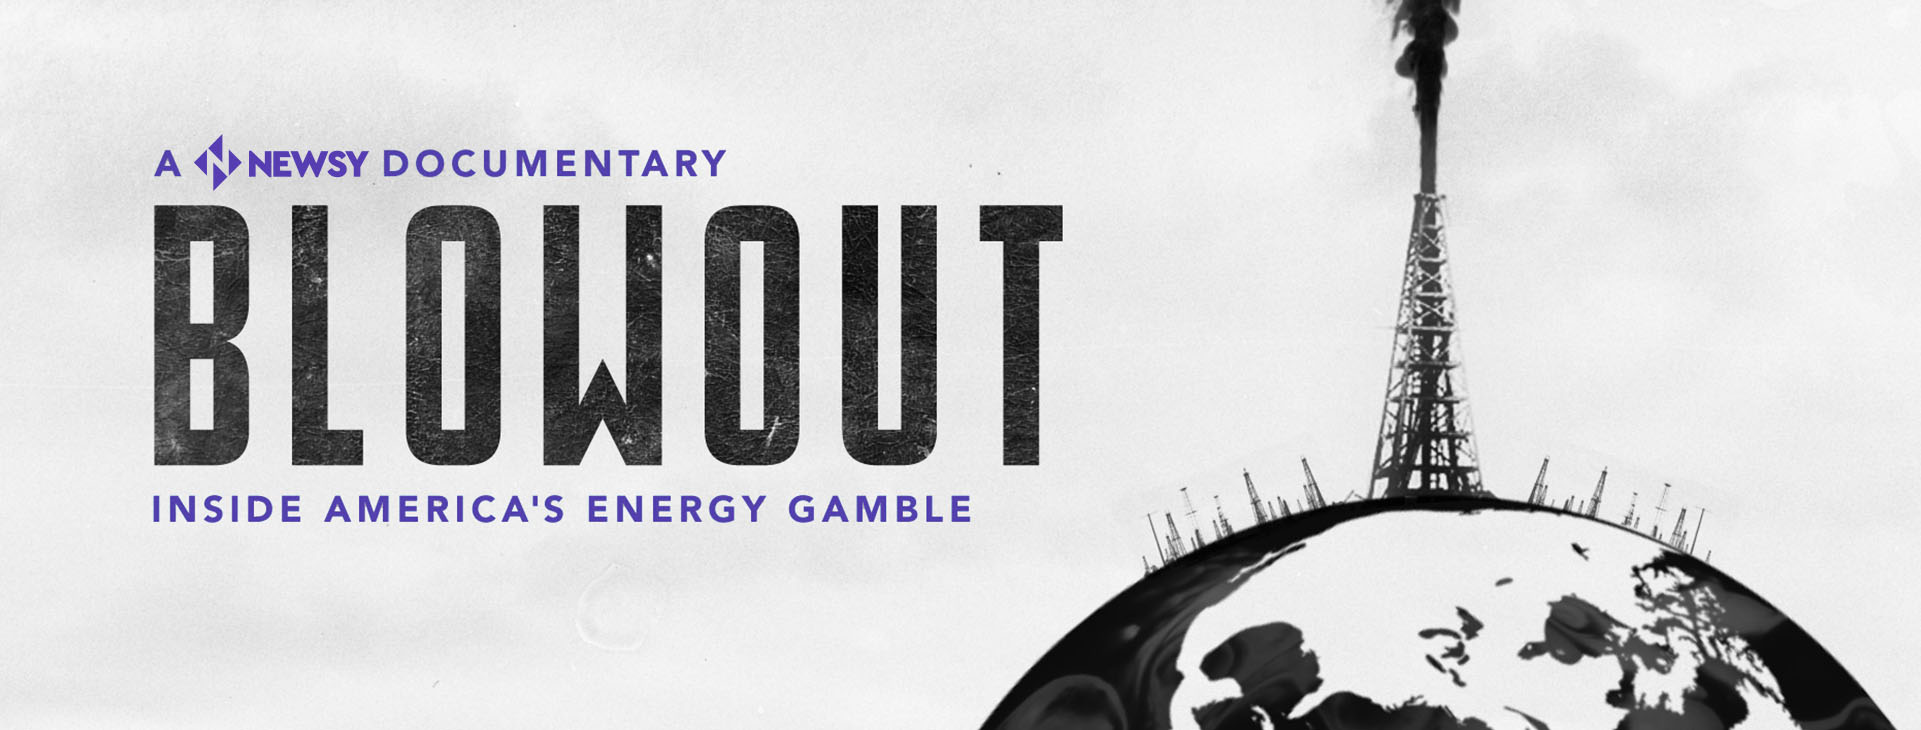 Blowout: Inside America's Energy Gamble